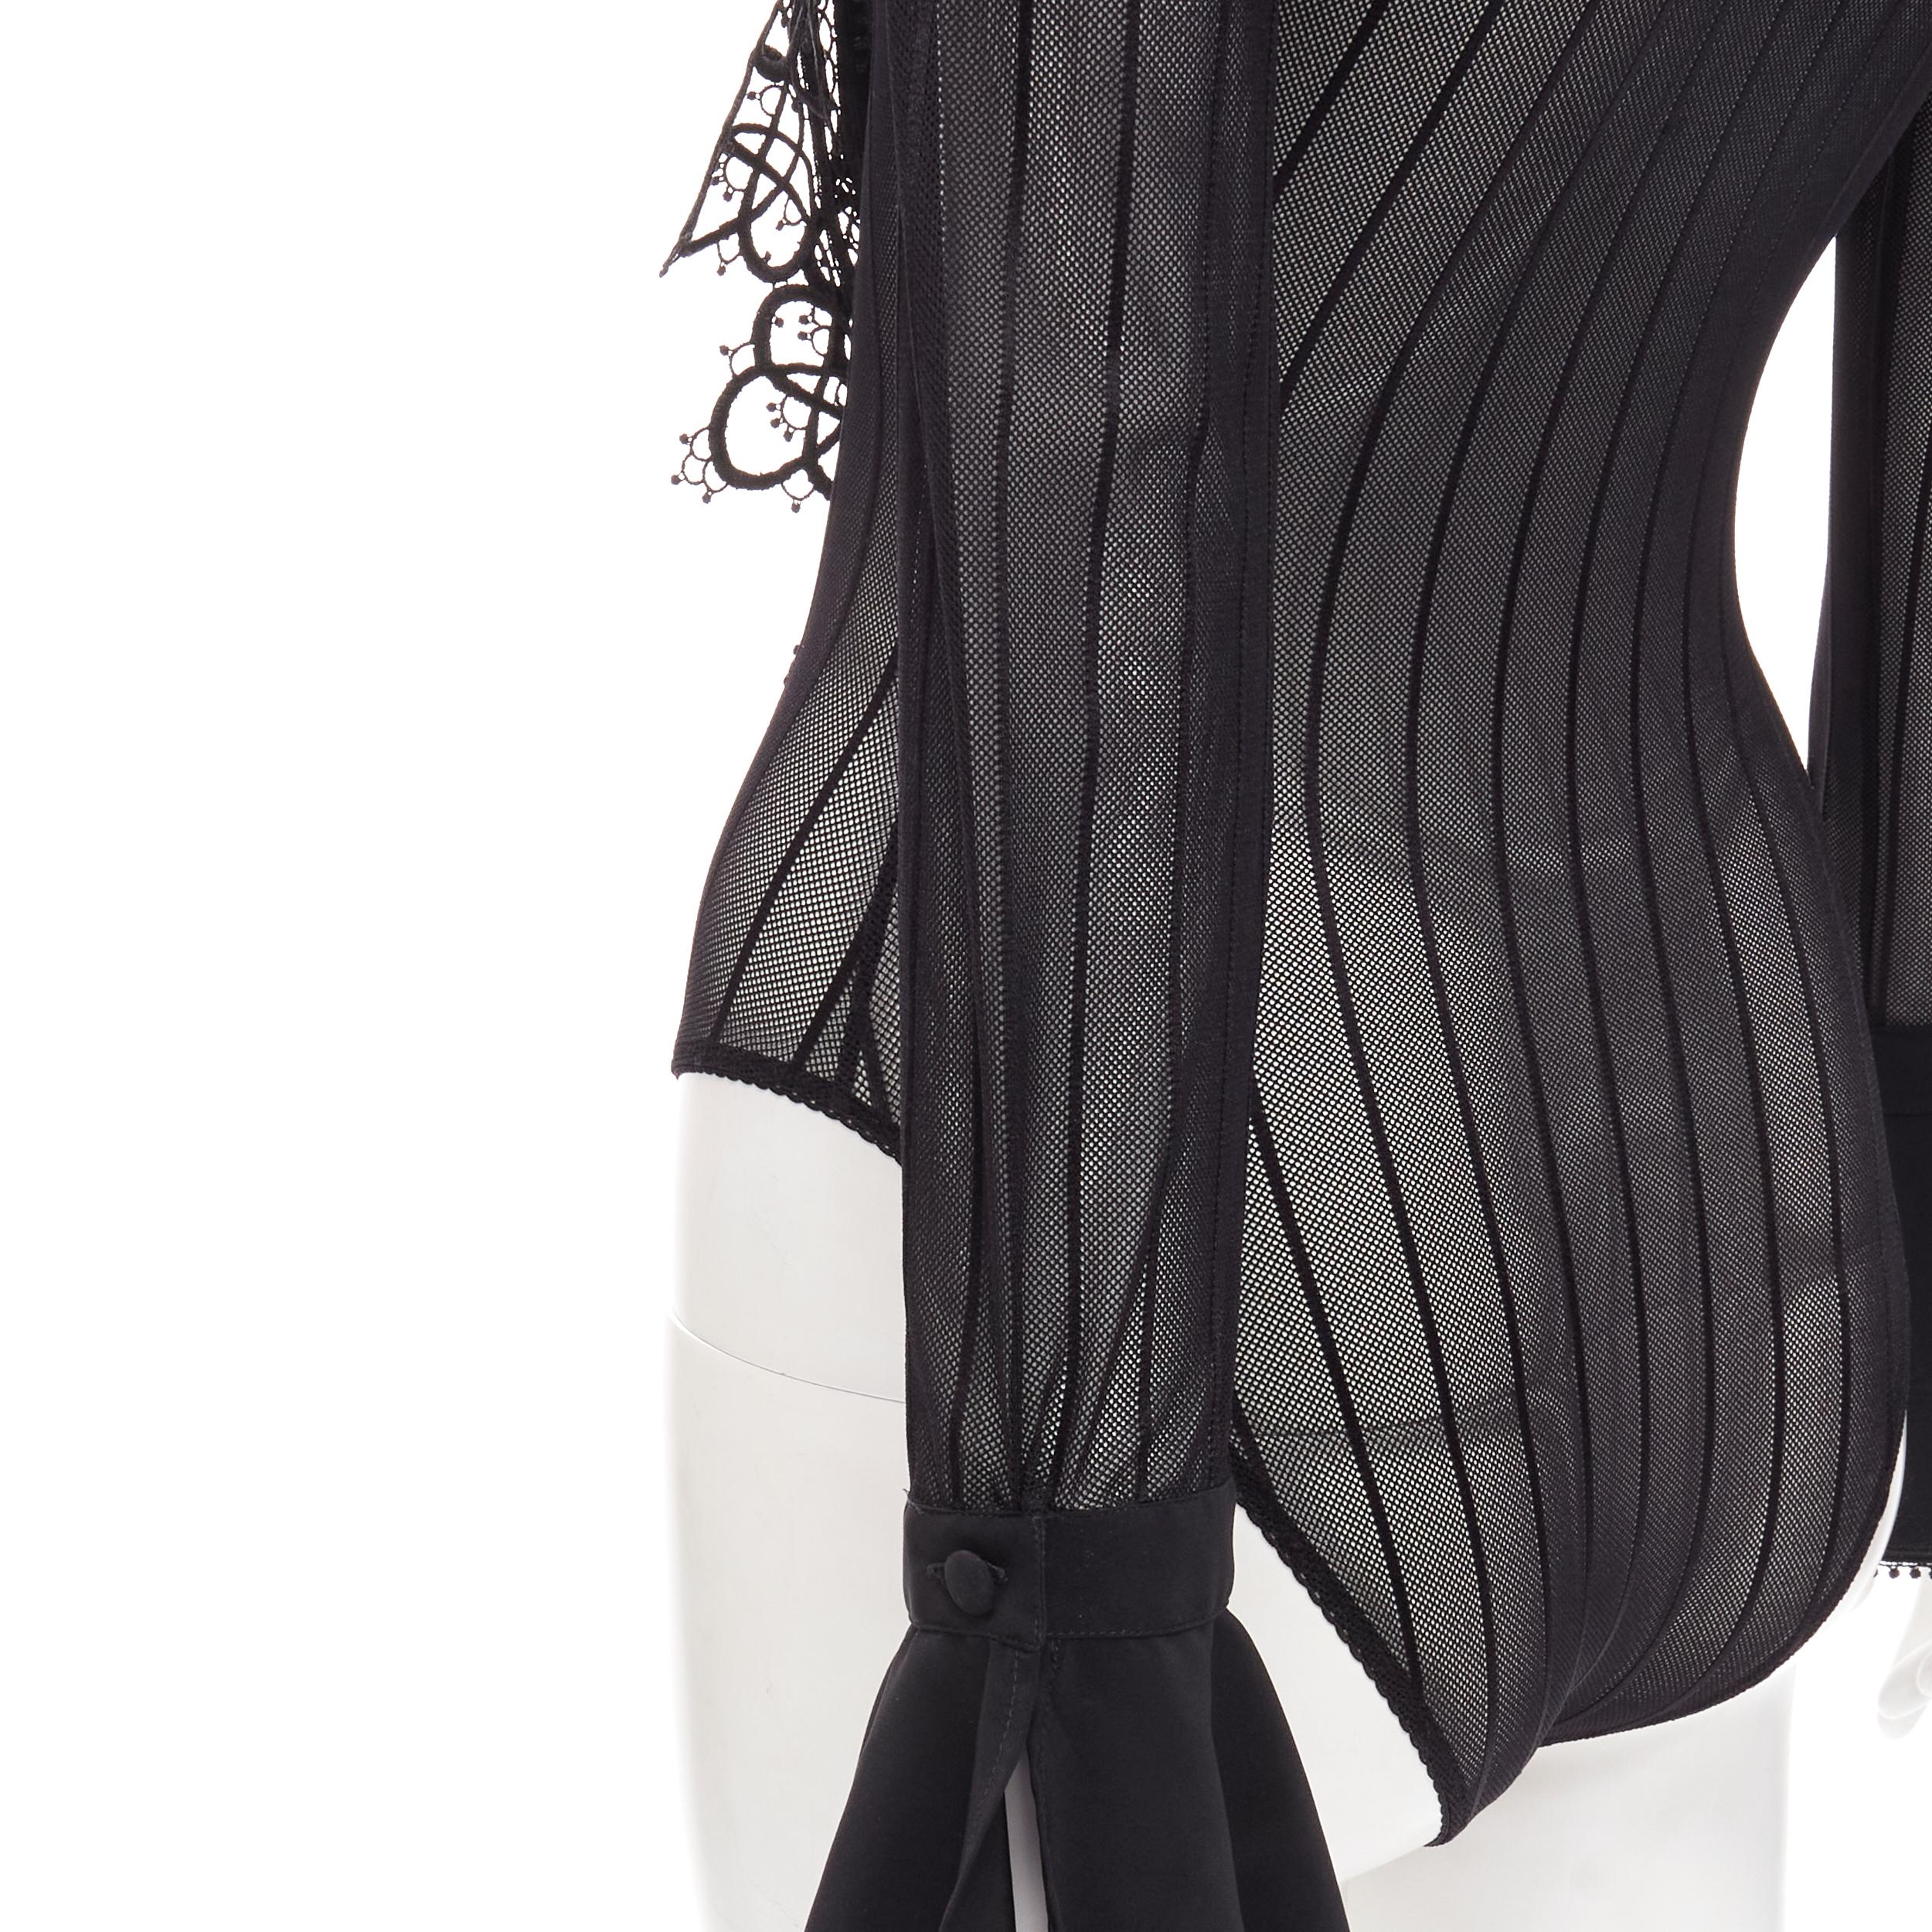 RITMO DI PERLA LA PERLA Vintage black embroidery tie scarf sheer bodysuit IT42 M 4